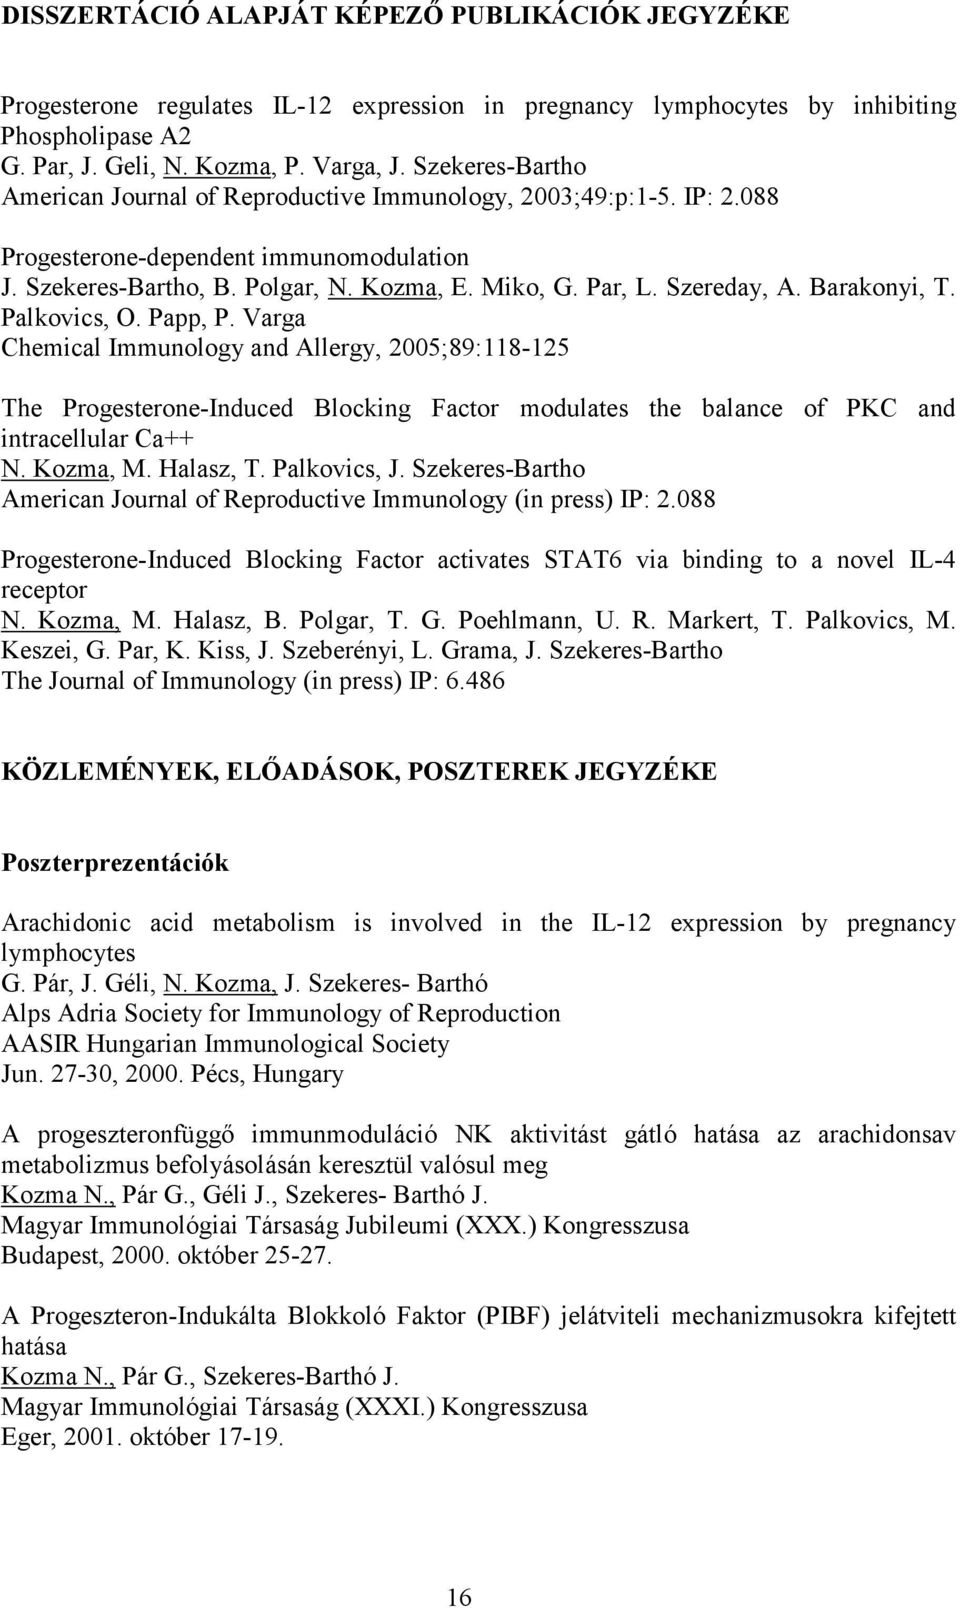 Barakonyi, T. Palkovics, O. Papp, P. Varga Chemical Immunology and Allergy, 2005;89:118-125 The Progesterone-Induced Blocking Factor modulates the balance of PKC and intracellular Ca++ N. Kozma, M.